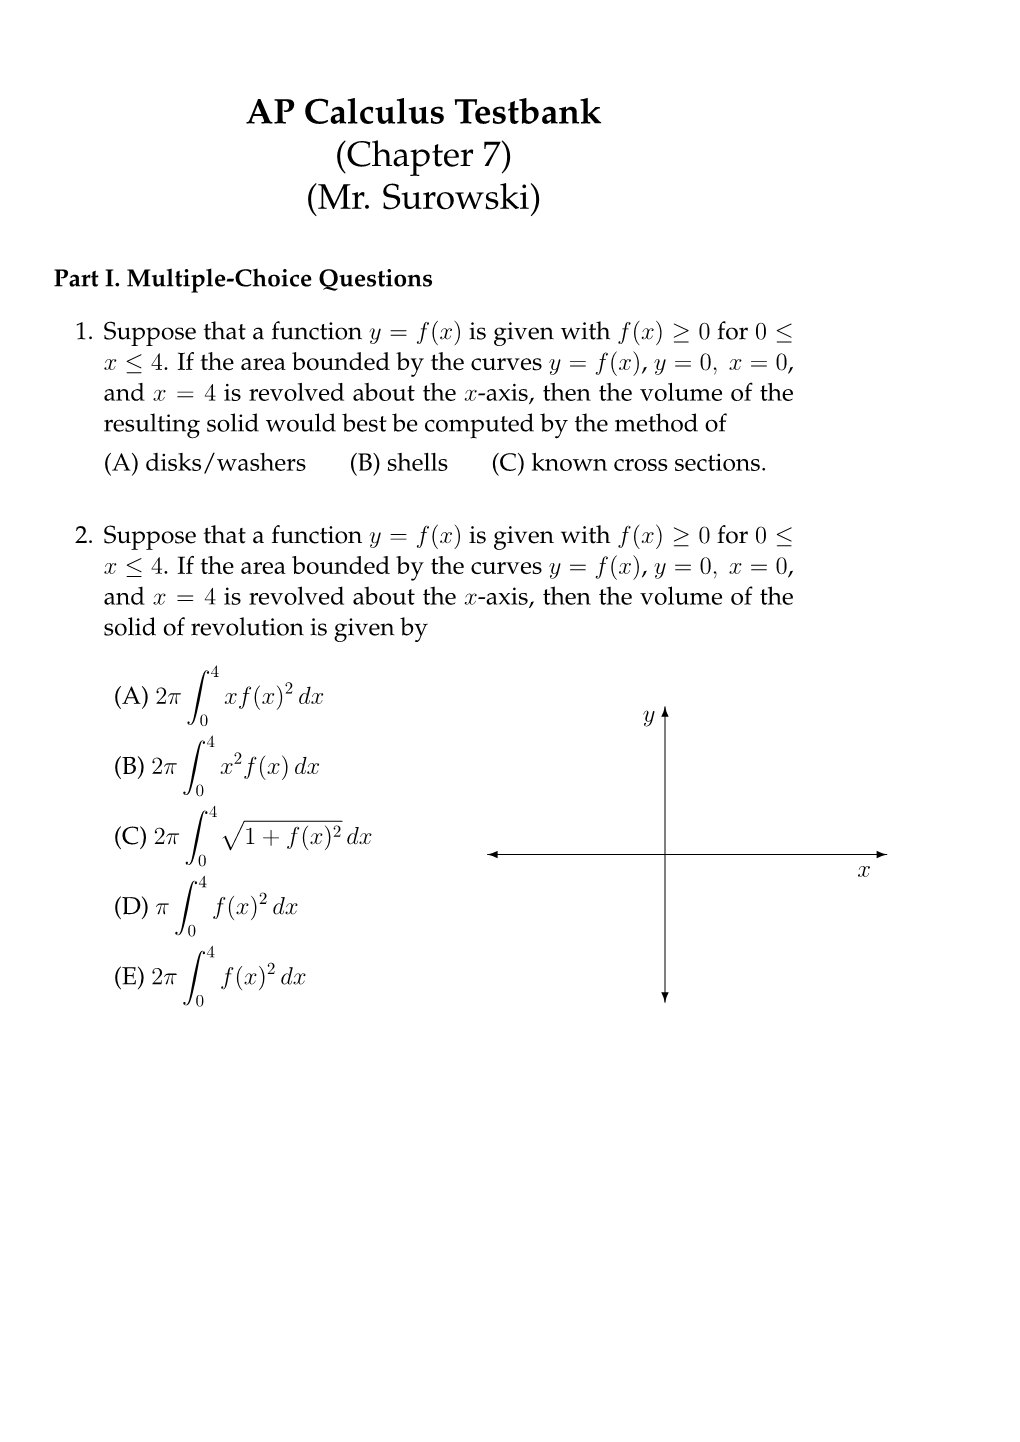 AP Calculus Testbank (Chapter 7) (Mr. Surowski)